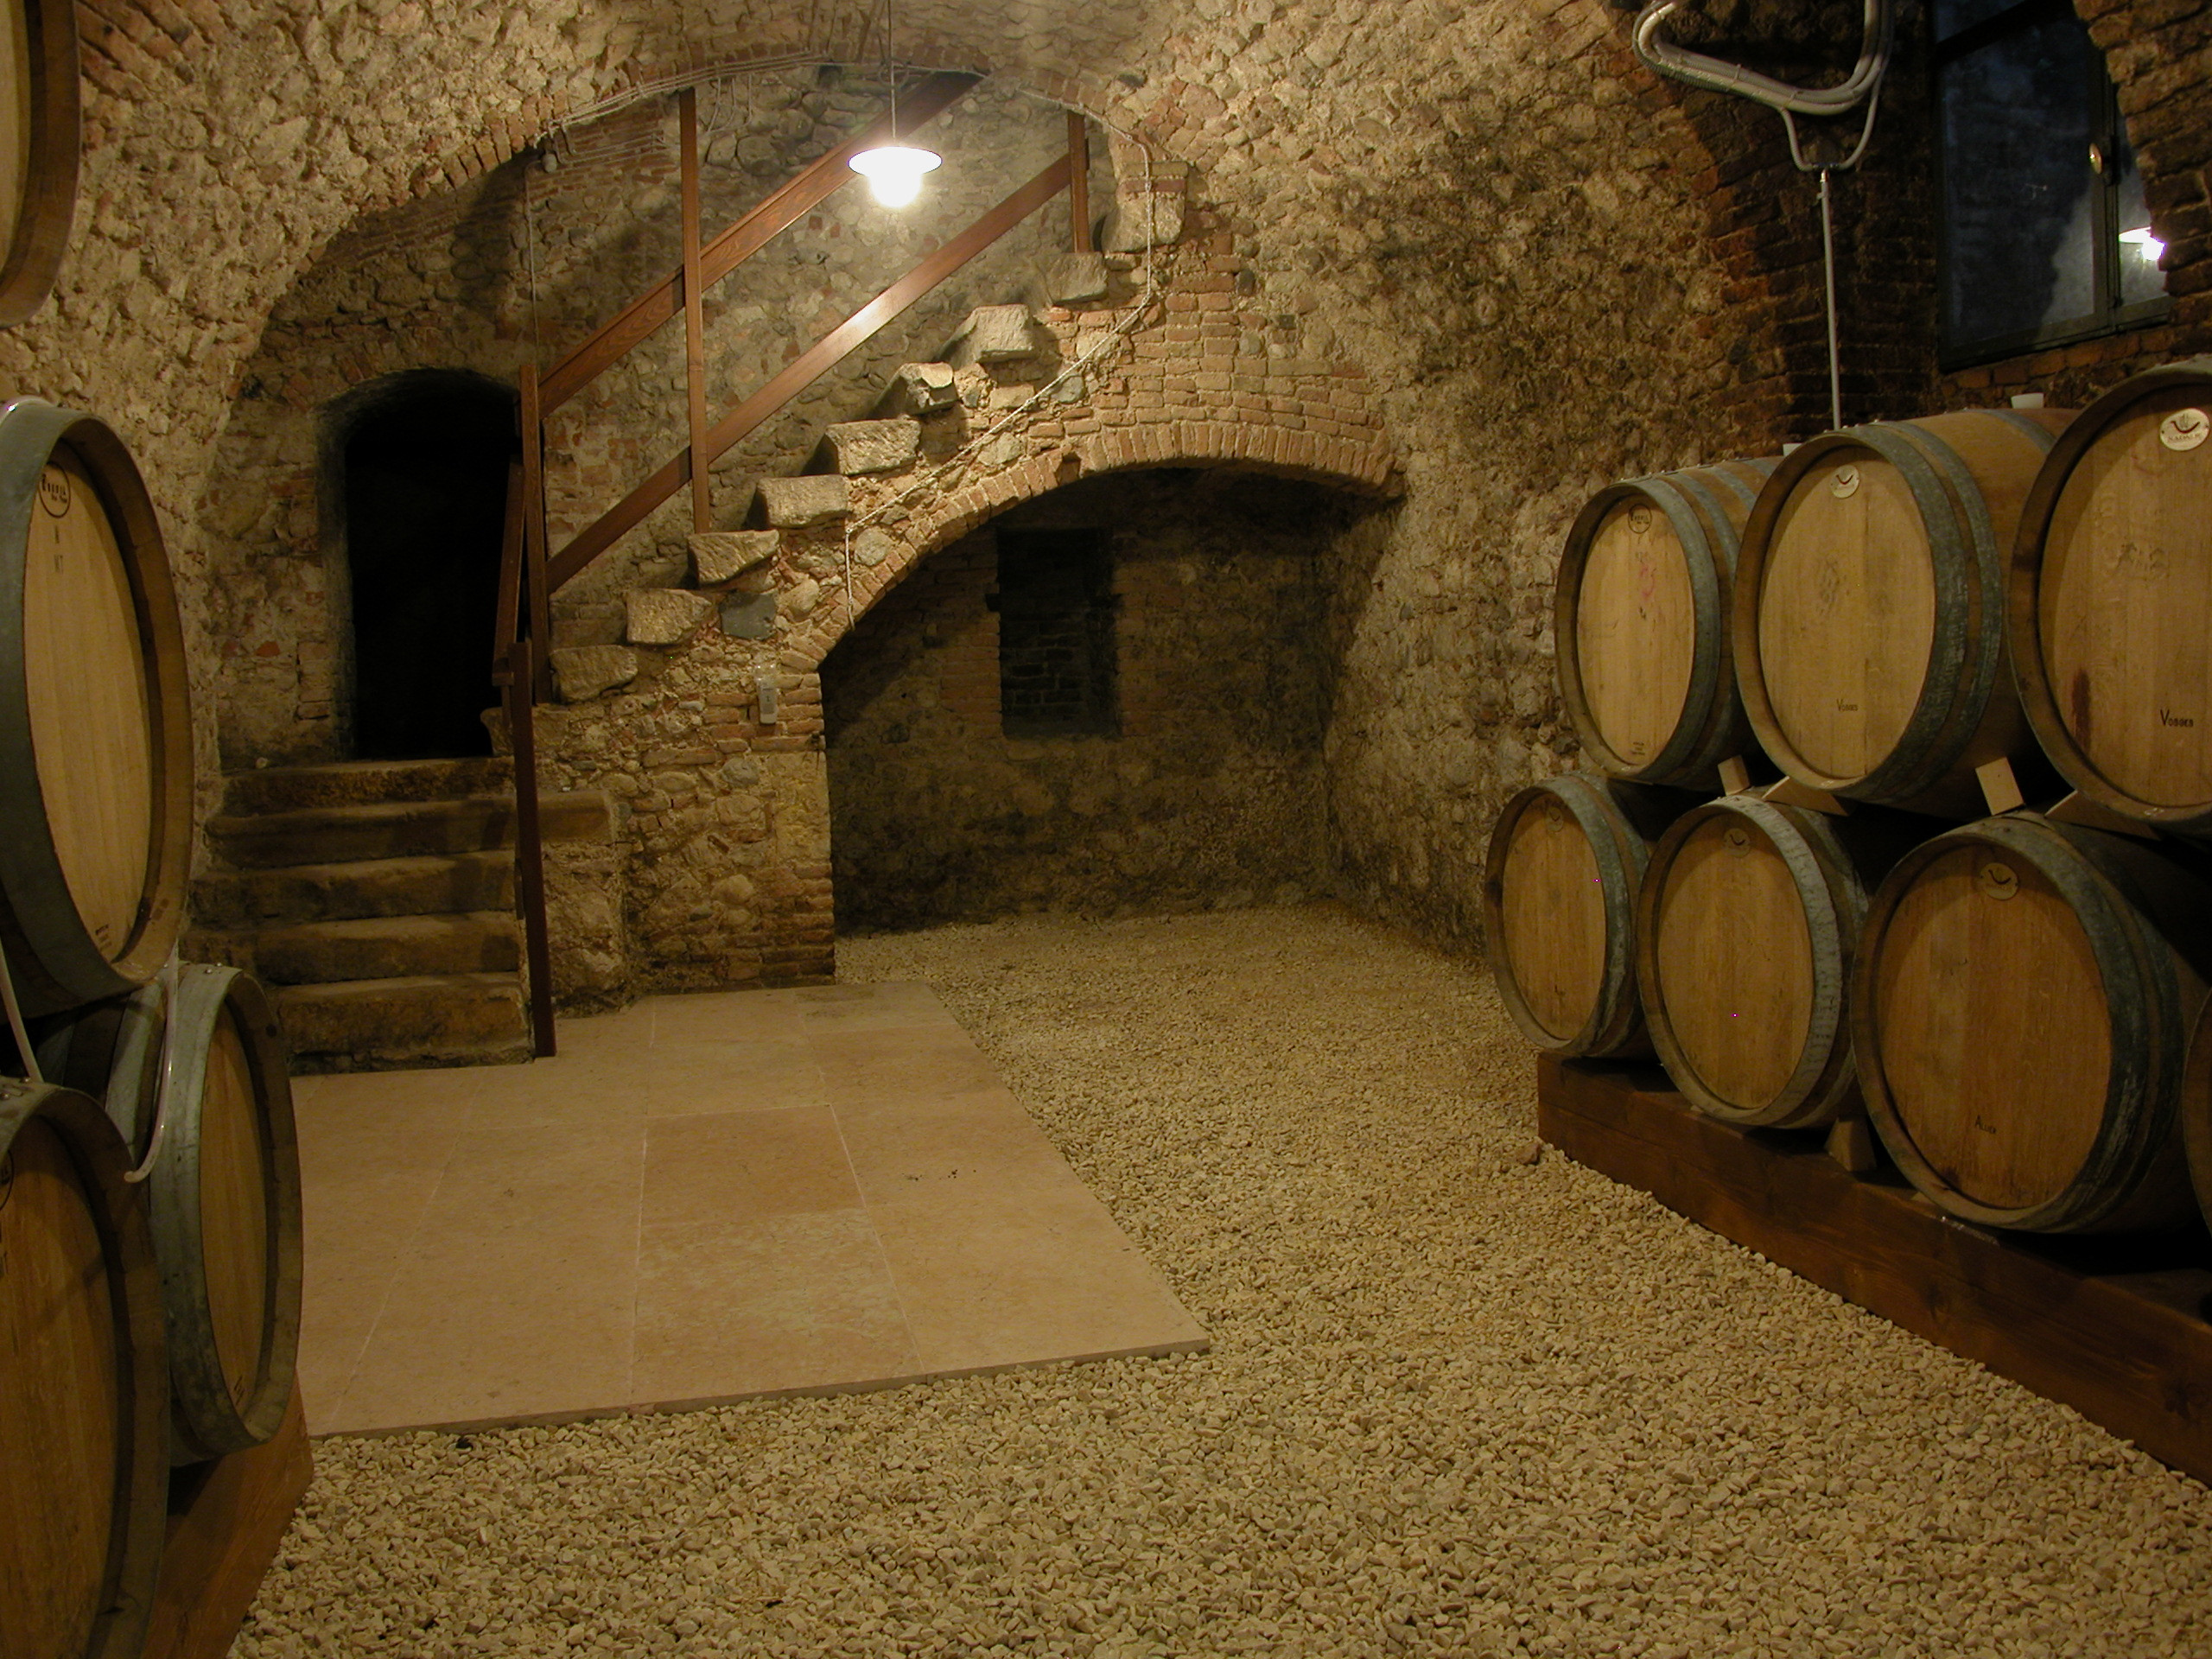 Best ideas about Verona Wine Cellar
. Save or Pin Sartori di Verona Gallery Now.